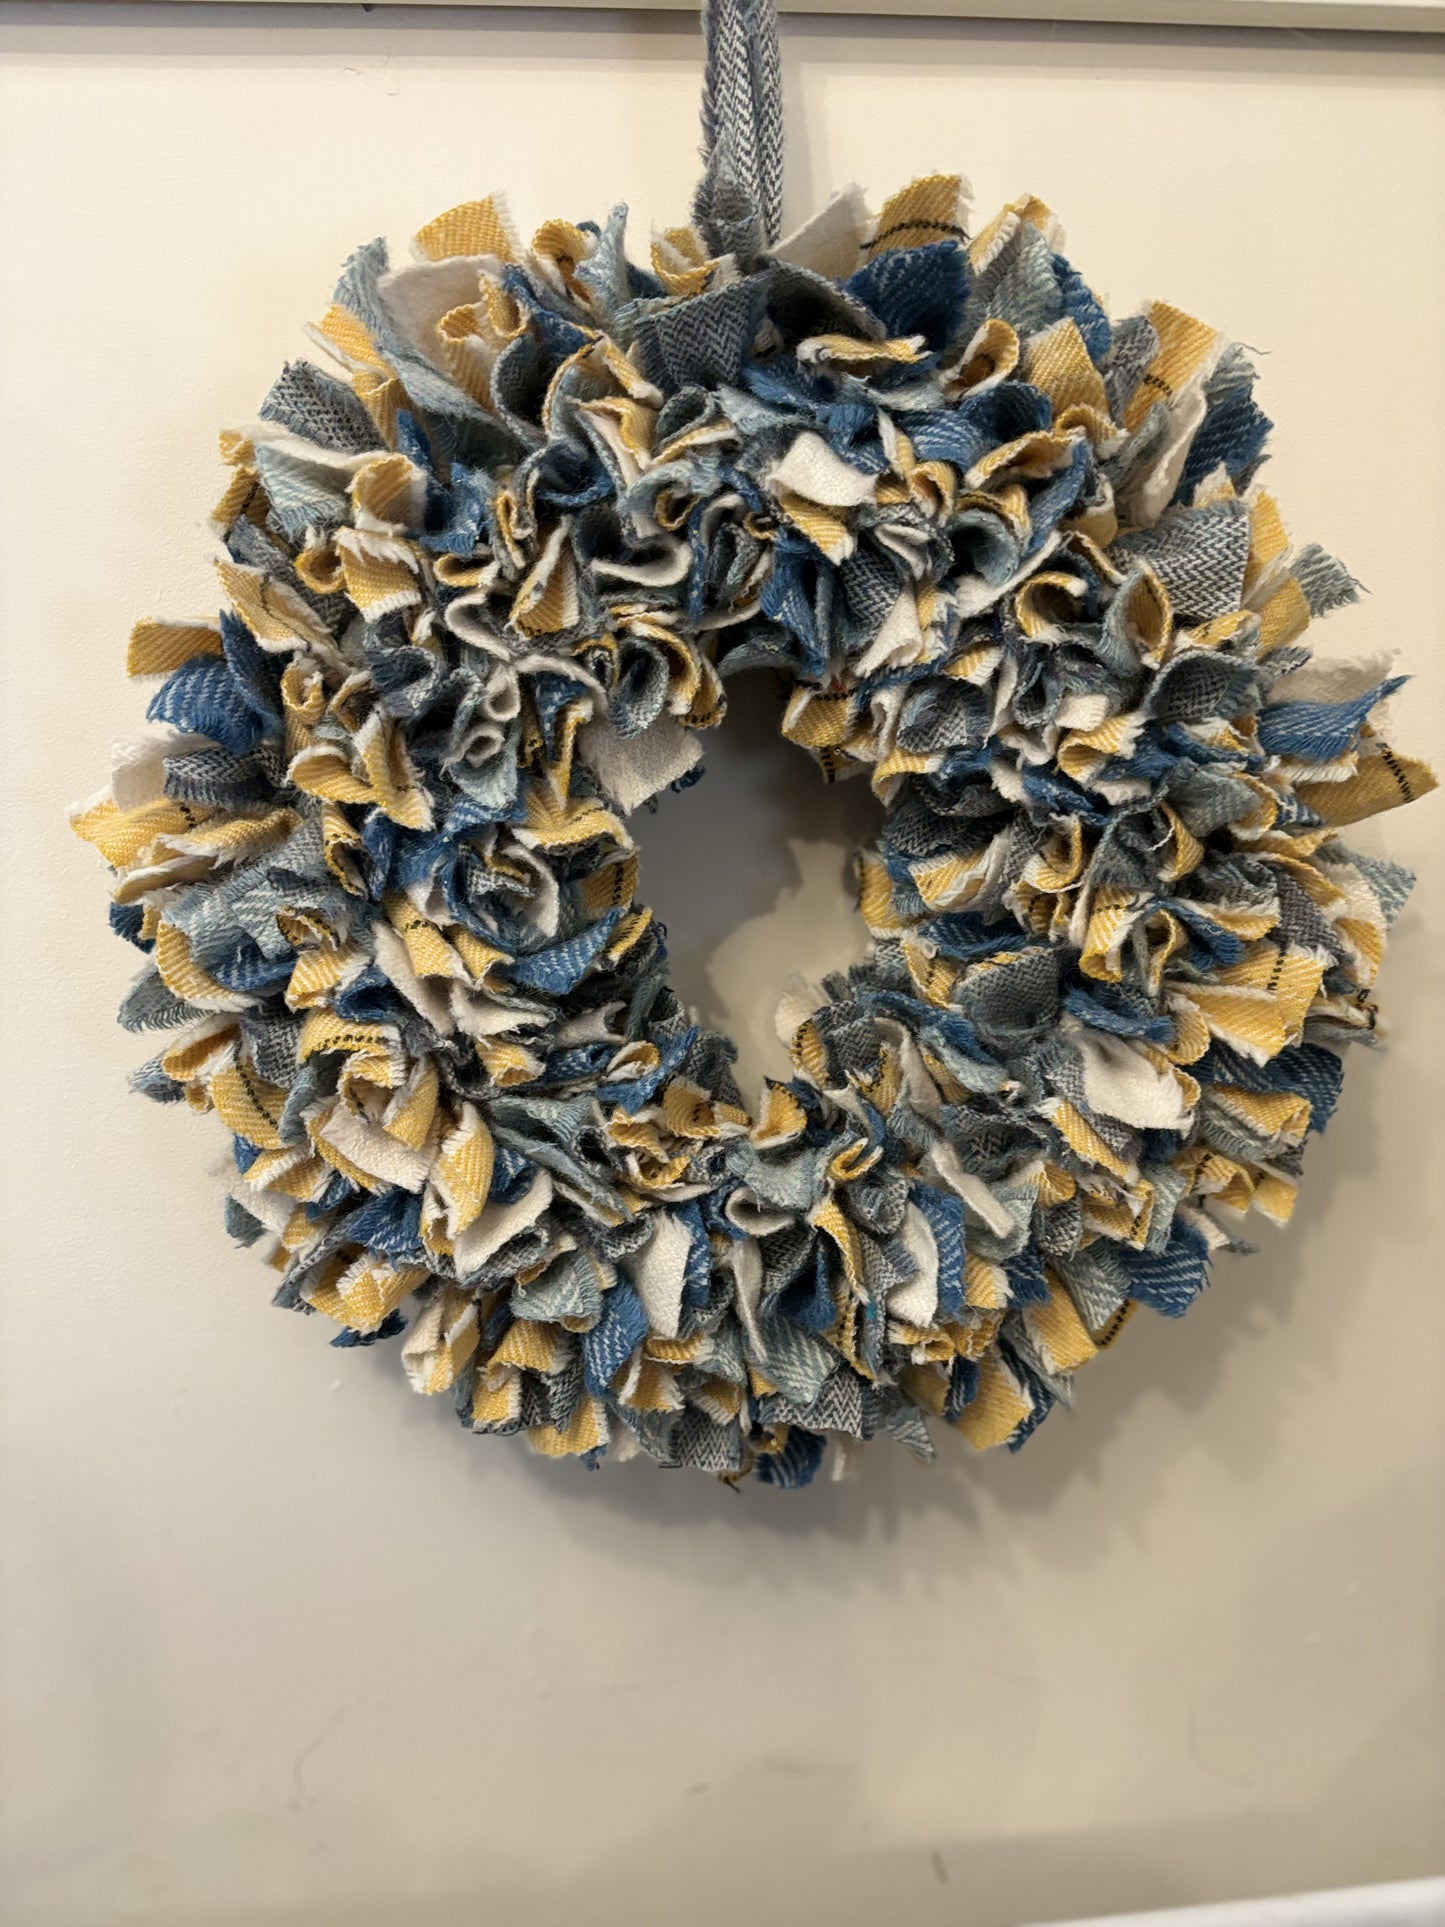 Luxury tweed wreath